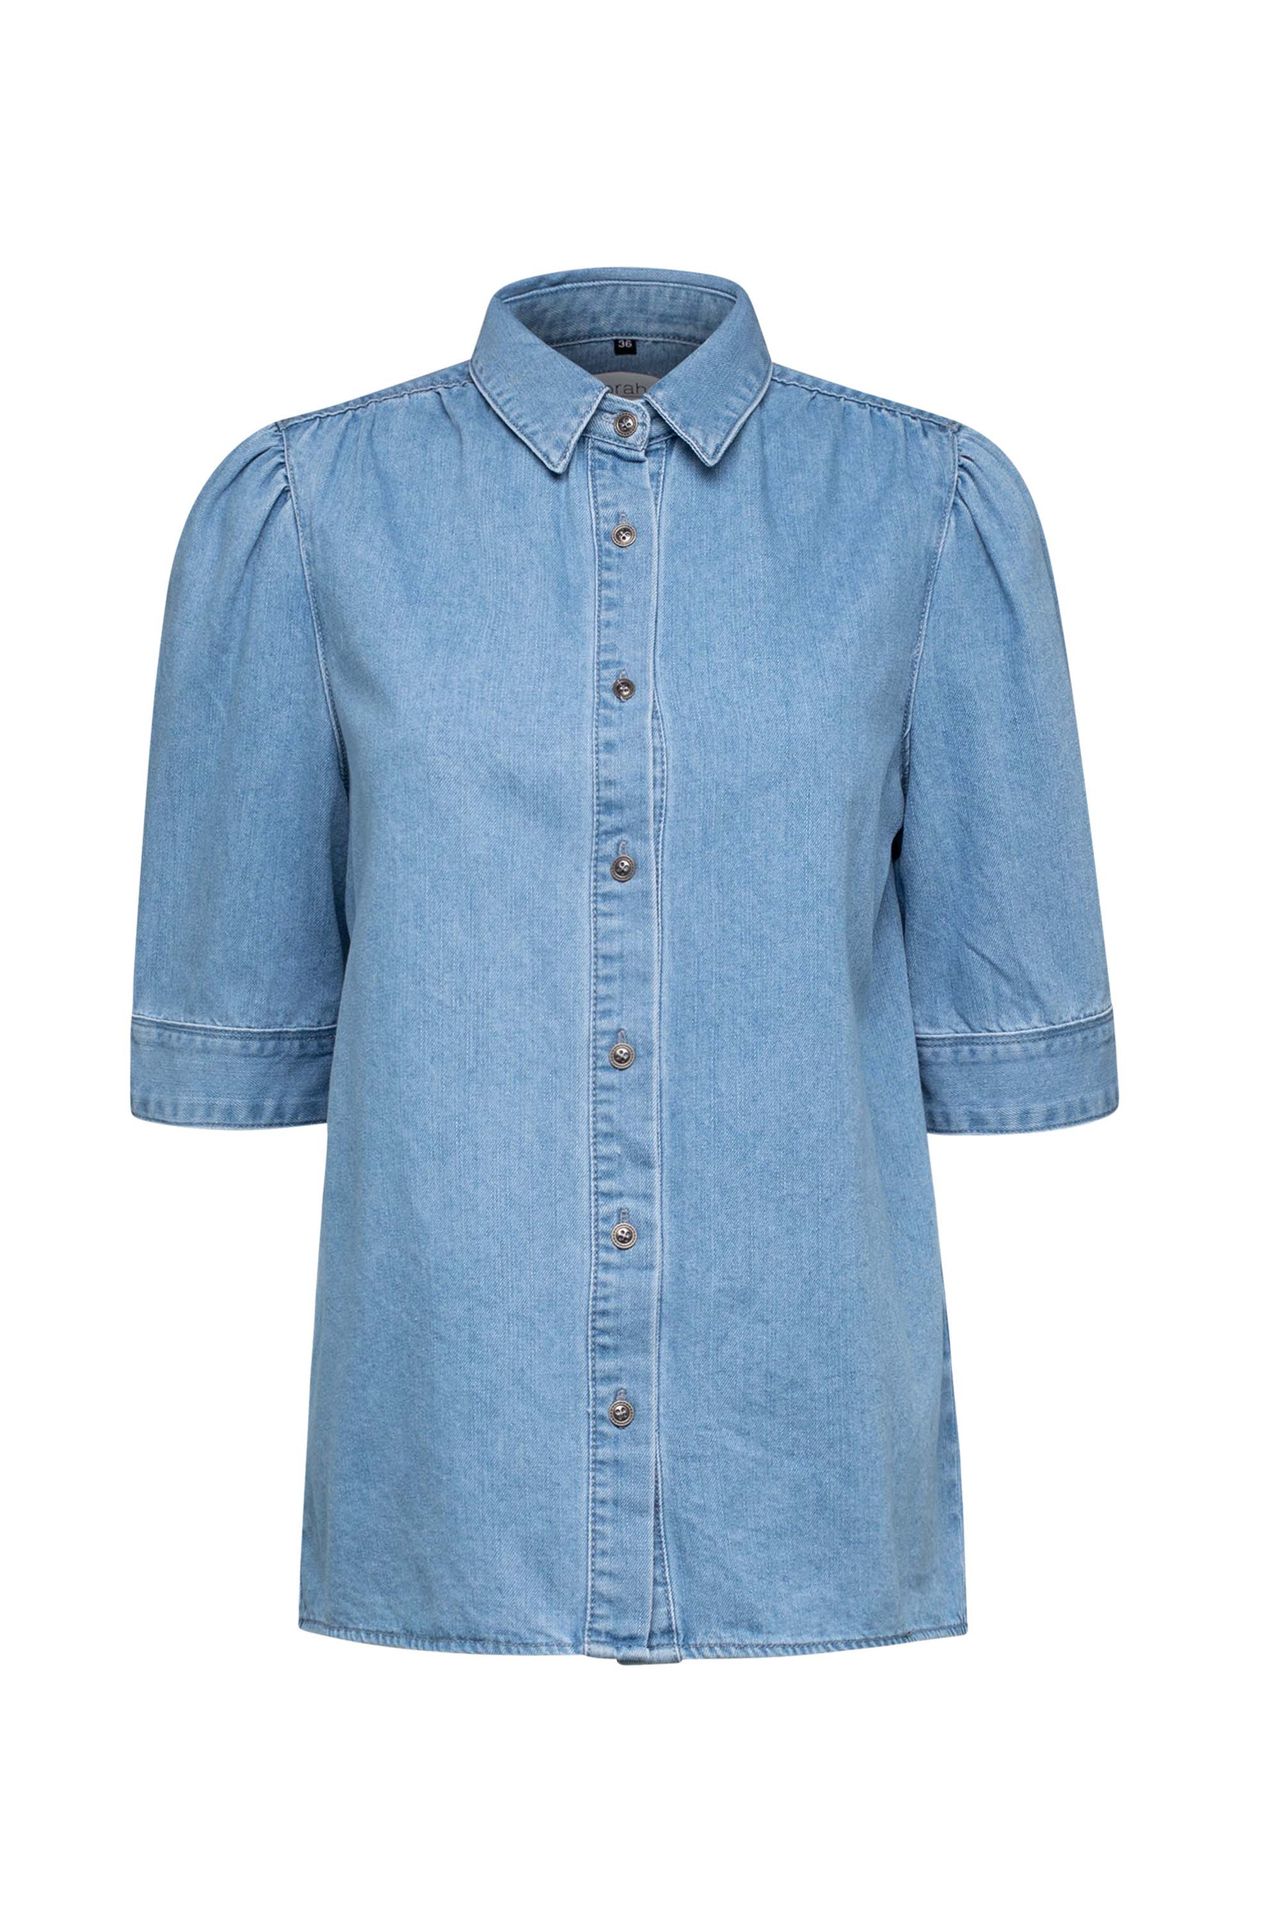 Norah Denim blouse blauw blue 212390-400